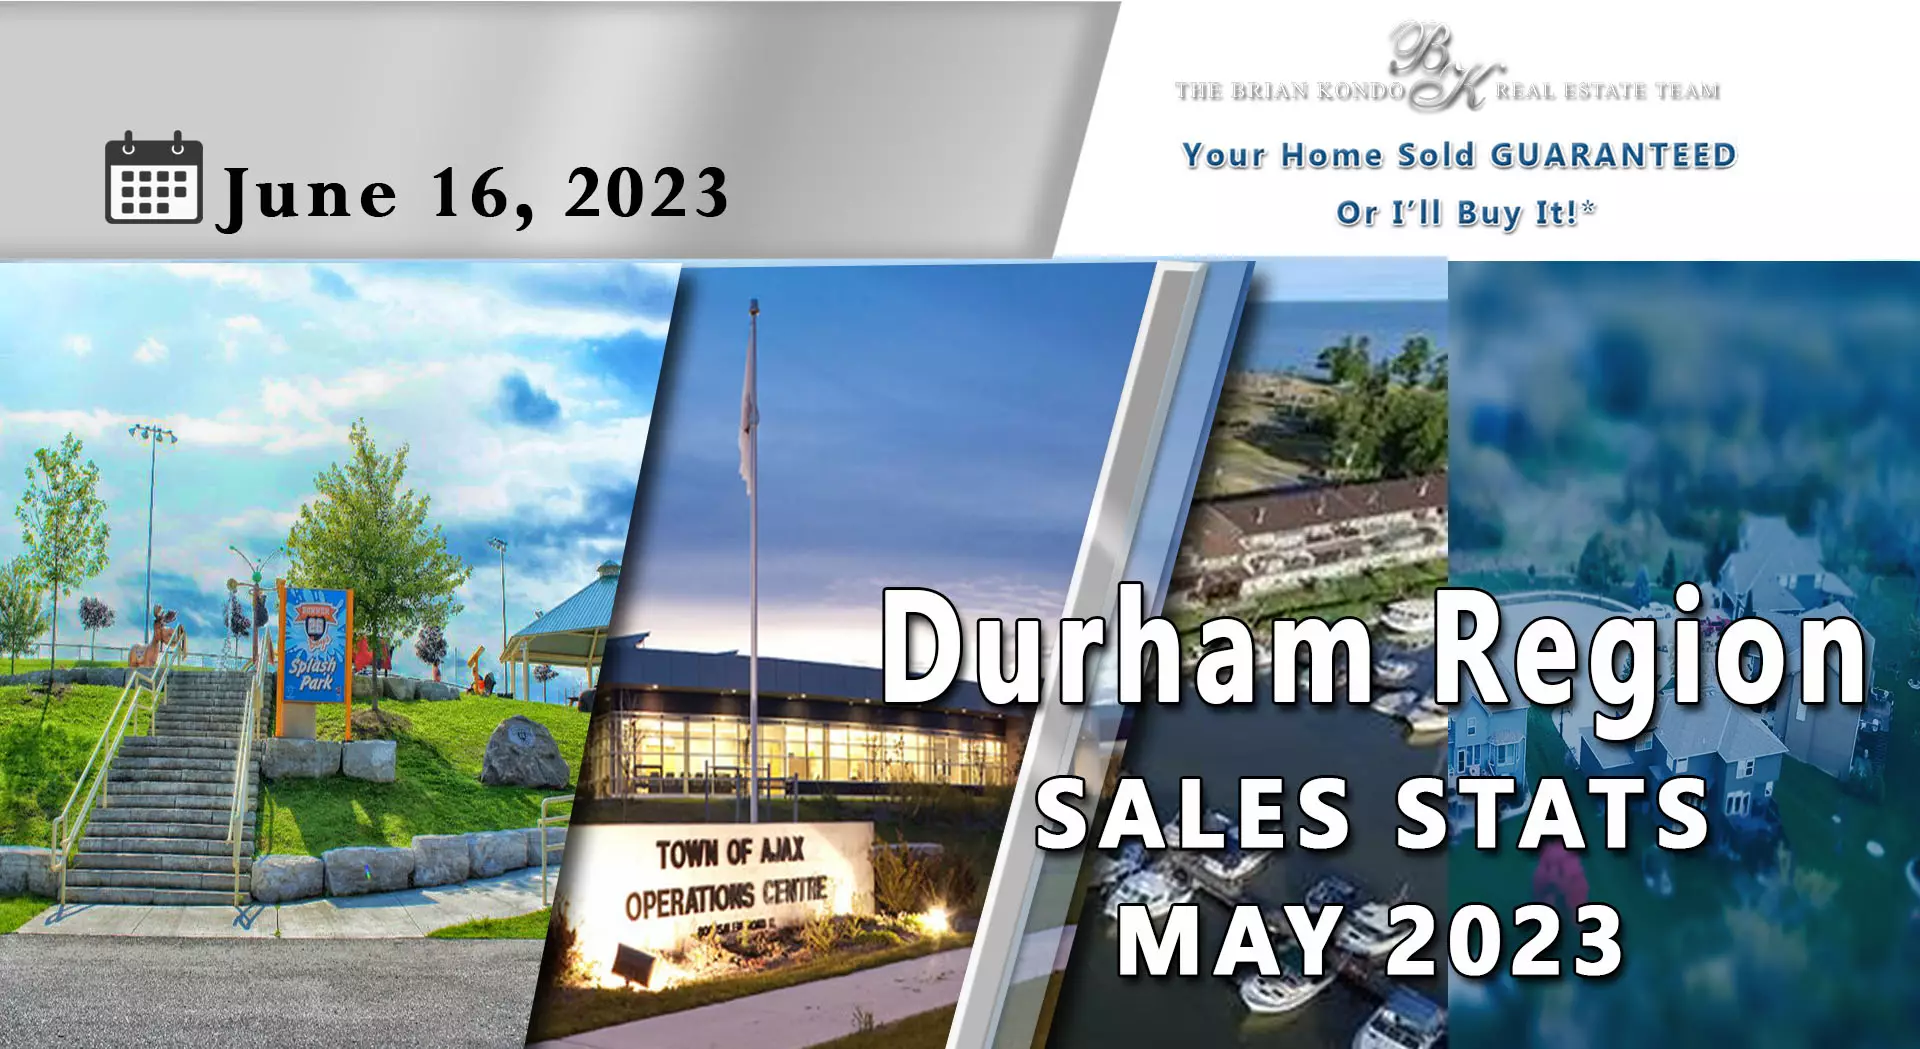 DURHAM REGION SALES STATS MAY 2023